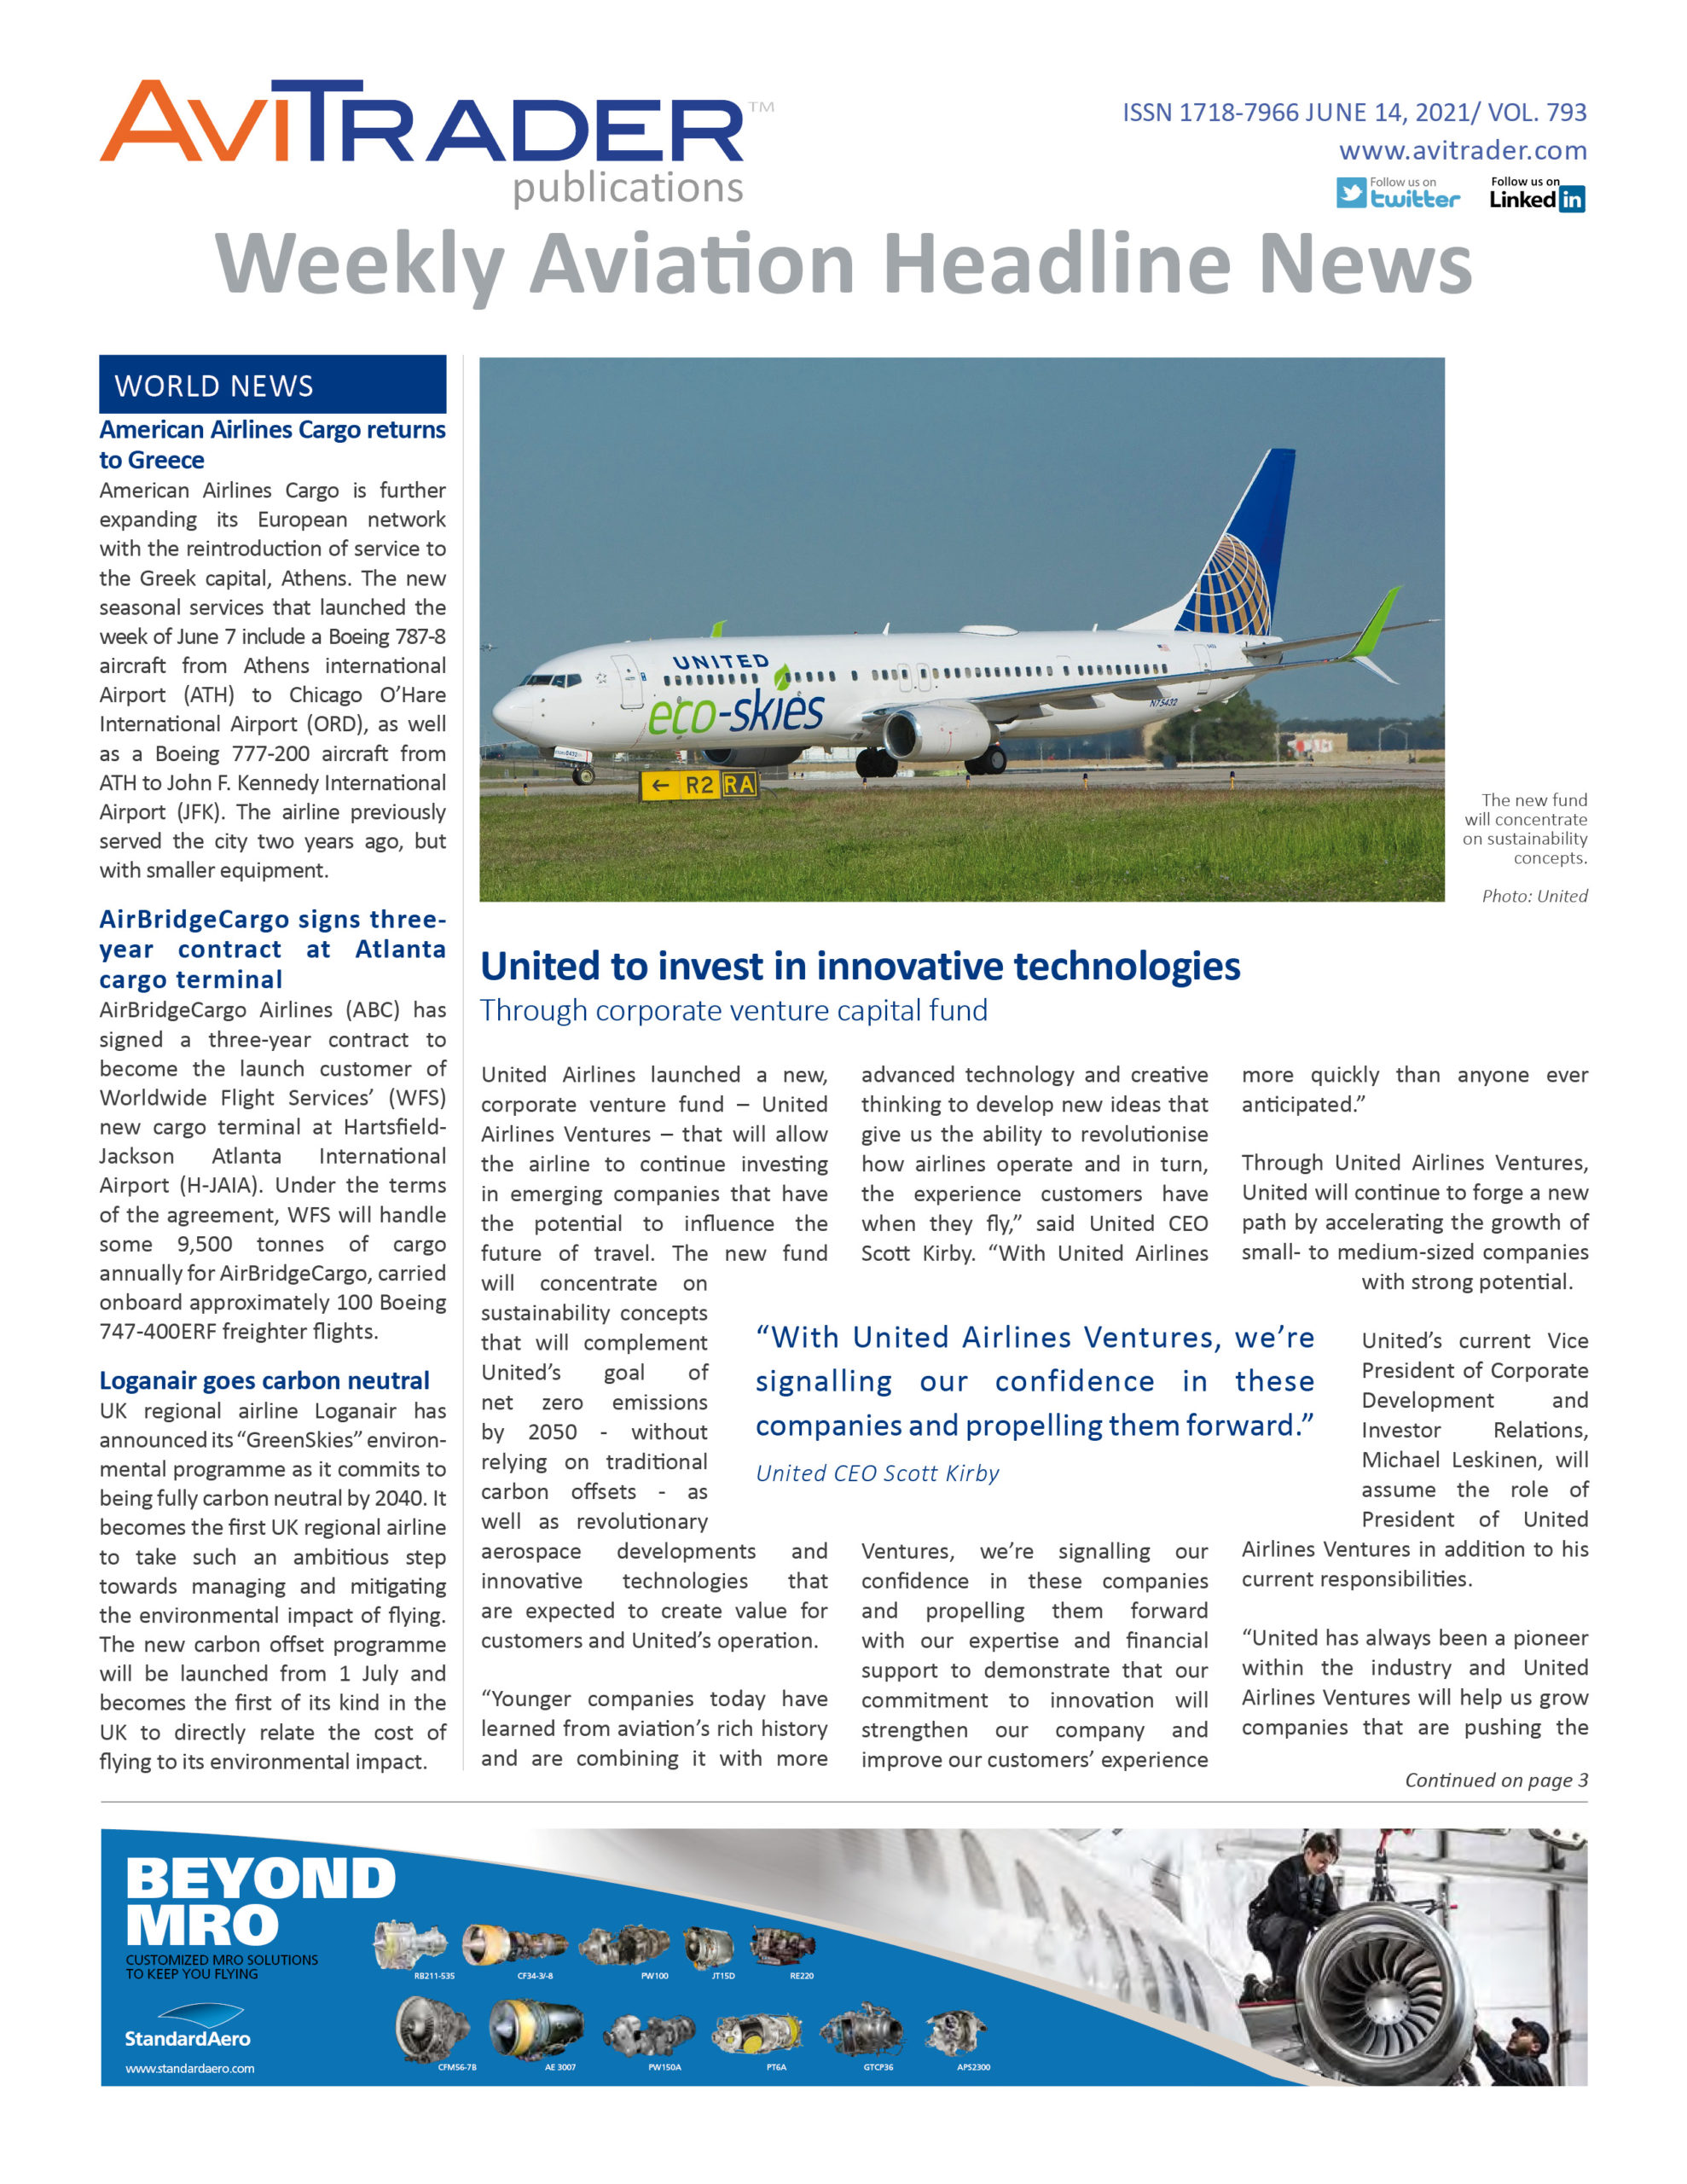 AviTrader_Weekly_Headline_News_Cover_2021-06-14